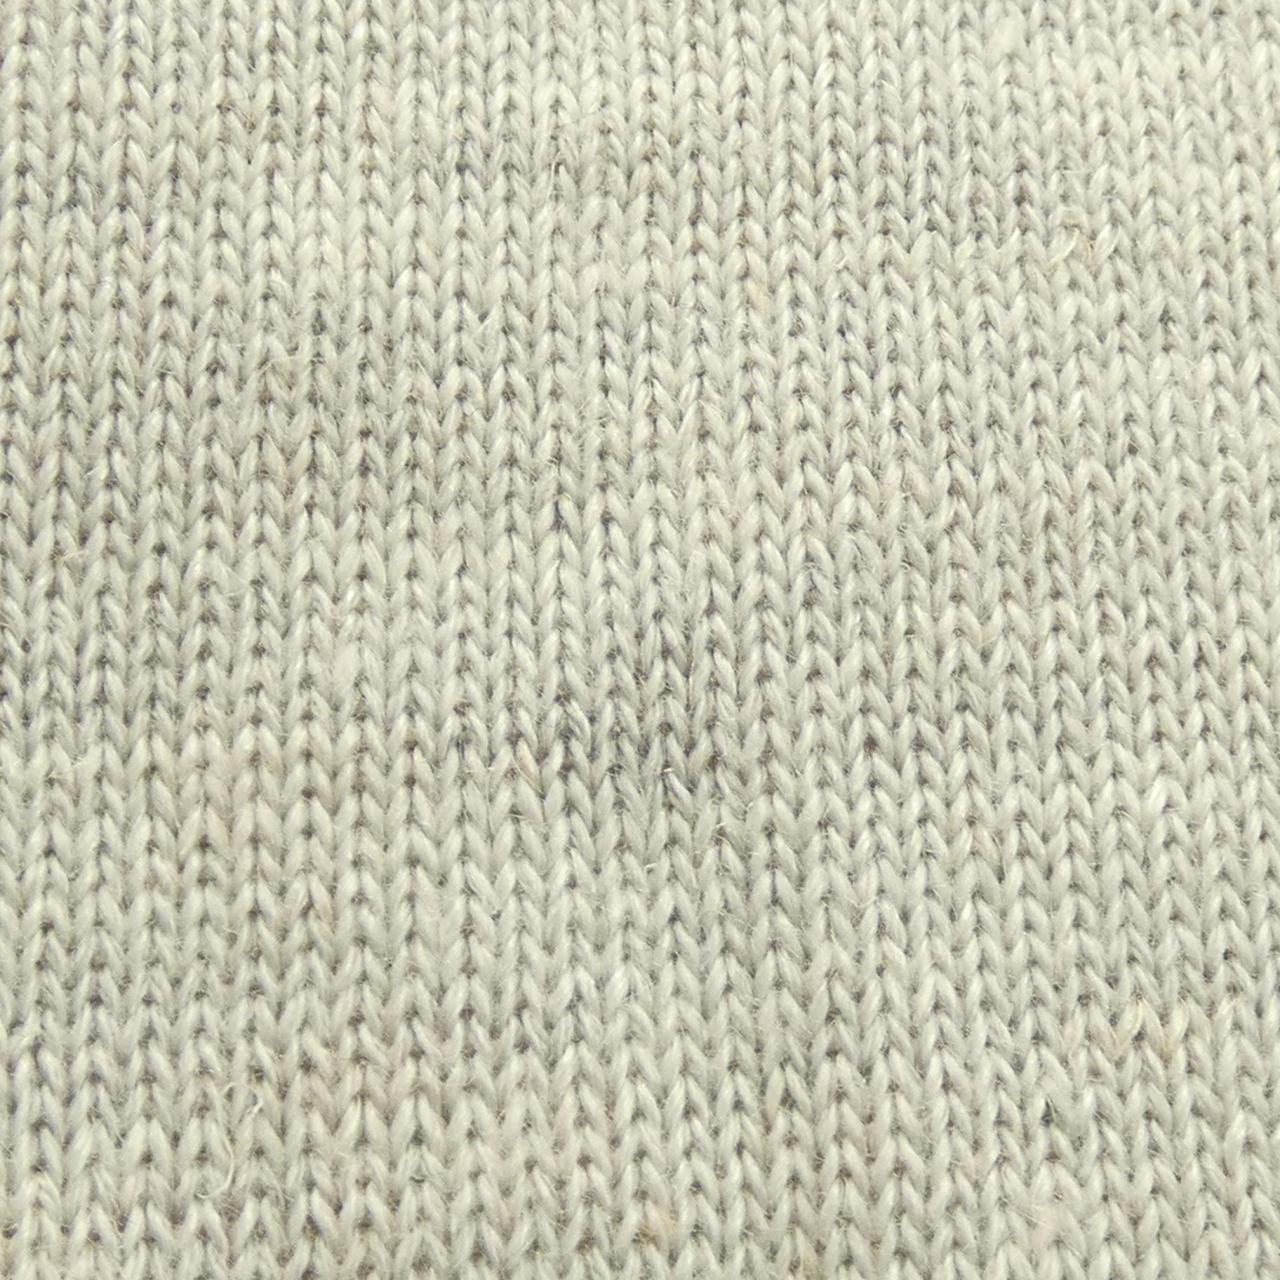 ASTRAET Knit